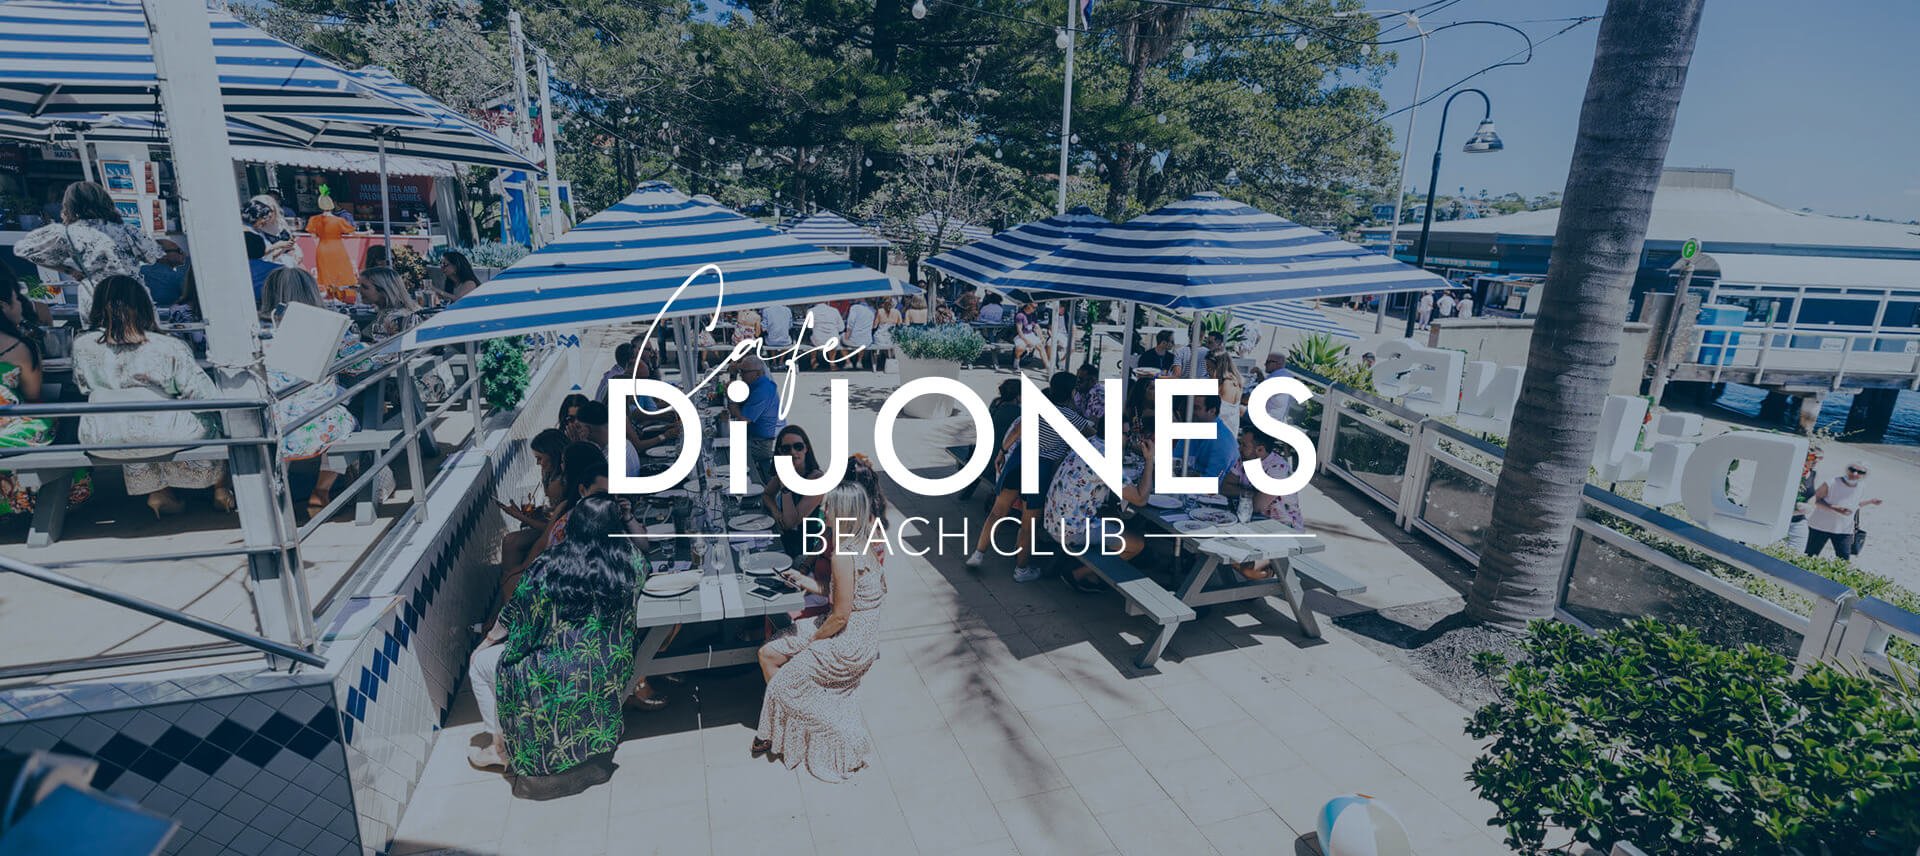 DiJones Beach Club 2020